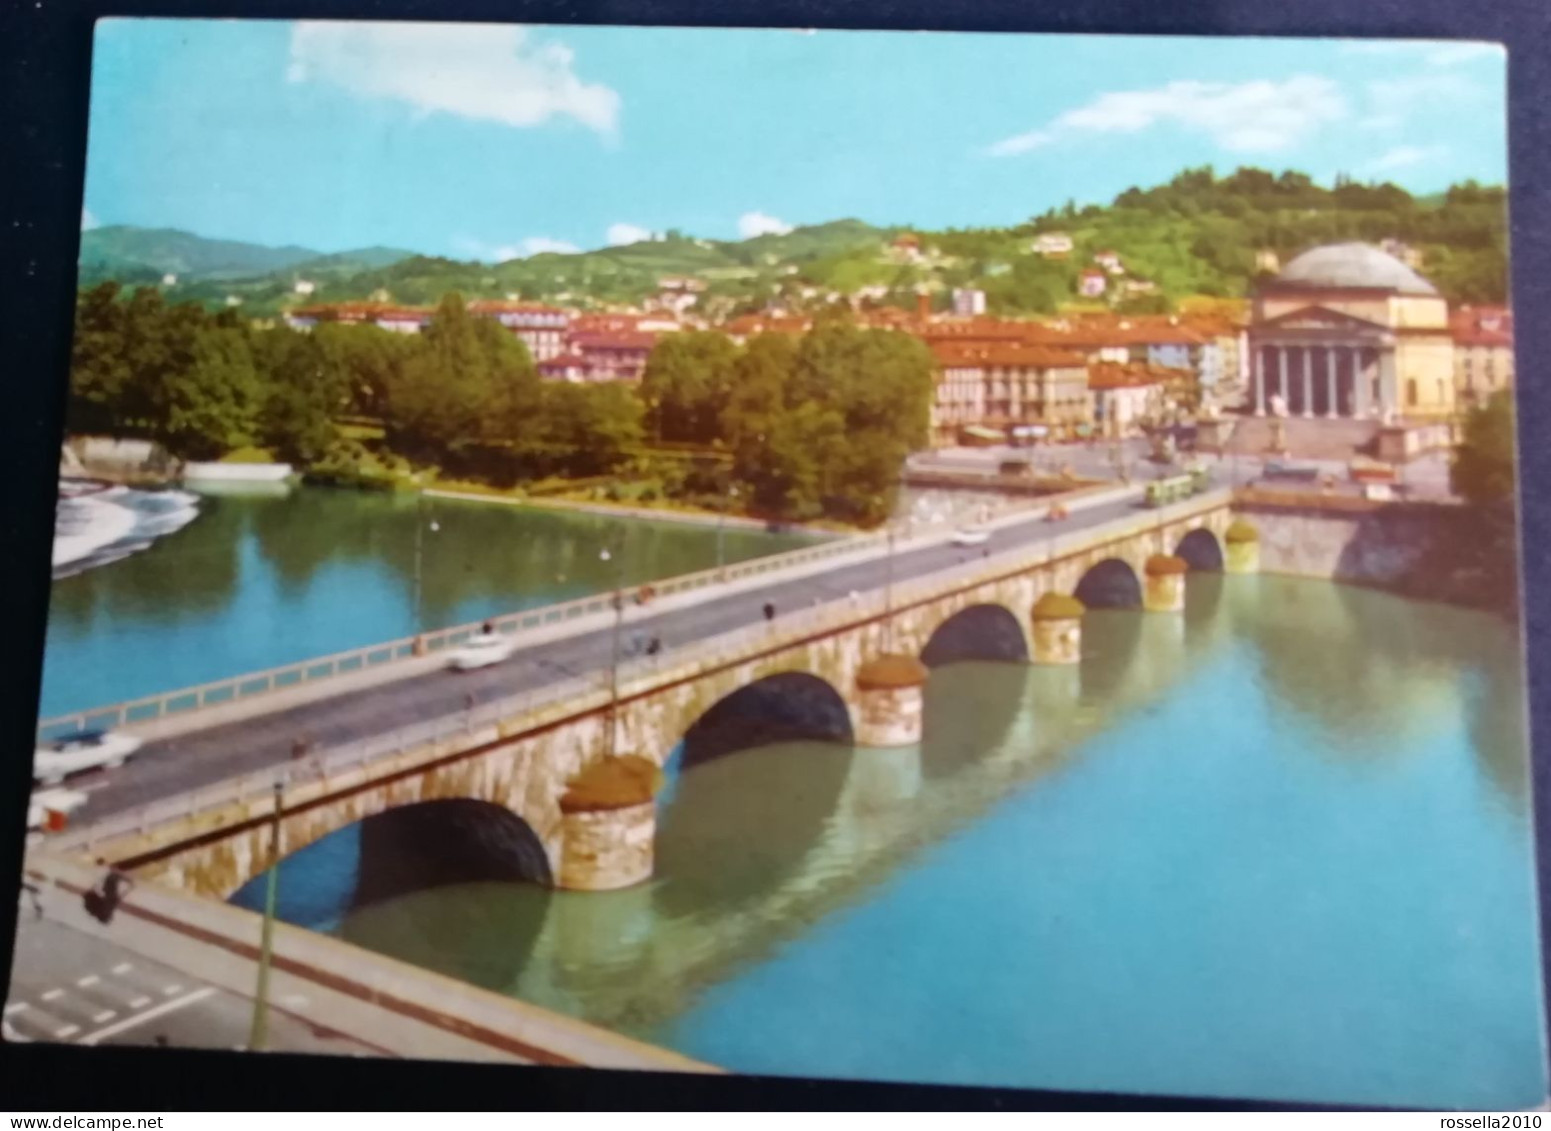 LOTTO 3 CARTOLINE ITALIA TORINO Italy Postcards Set ITALIEN Ansichtskarten - Autres Monuments, édifices